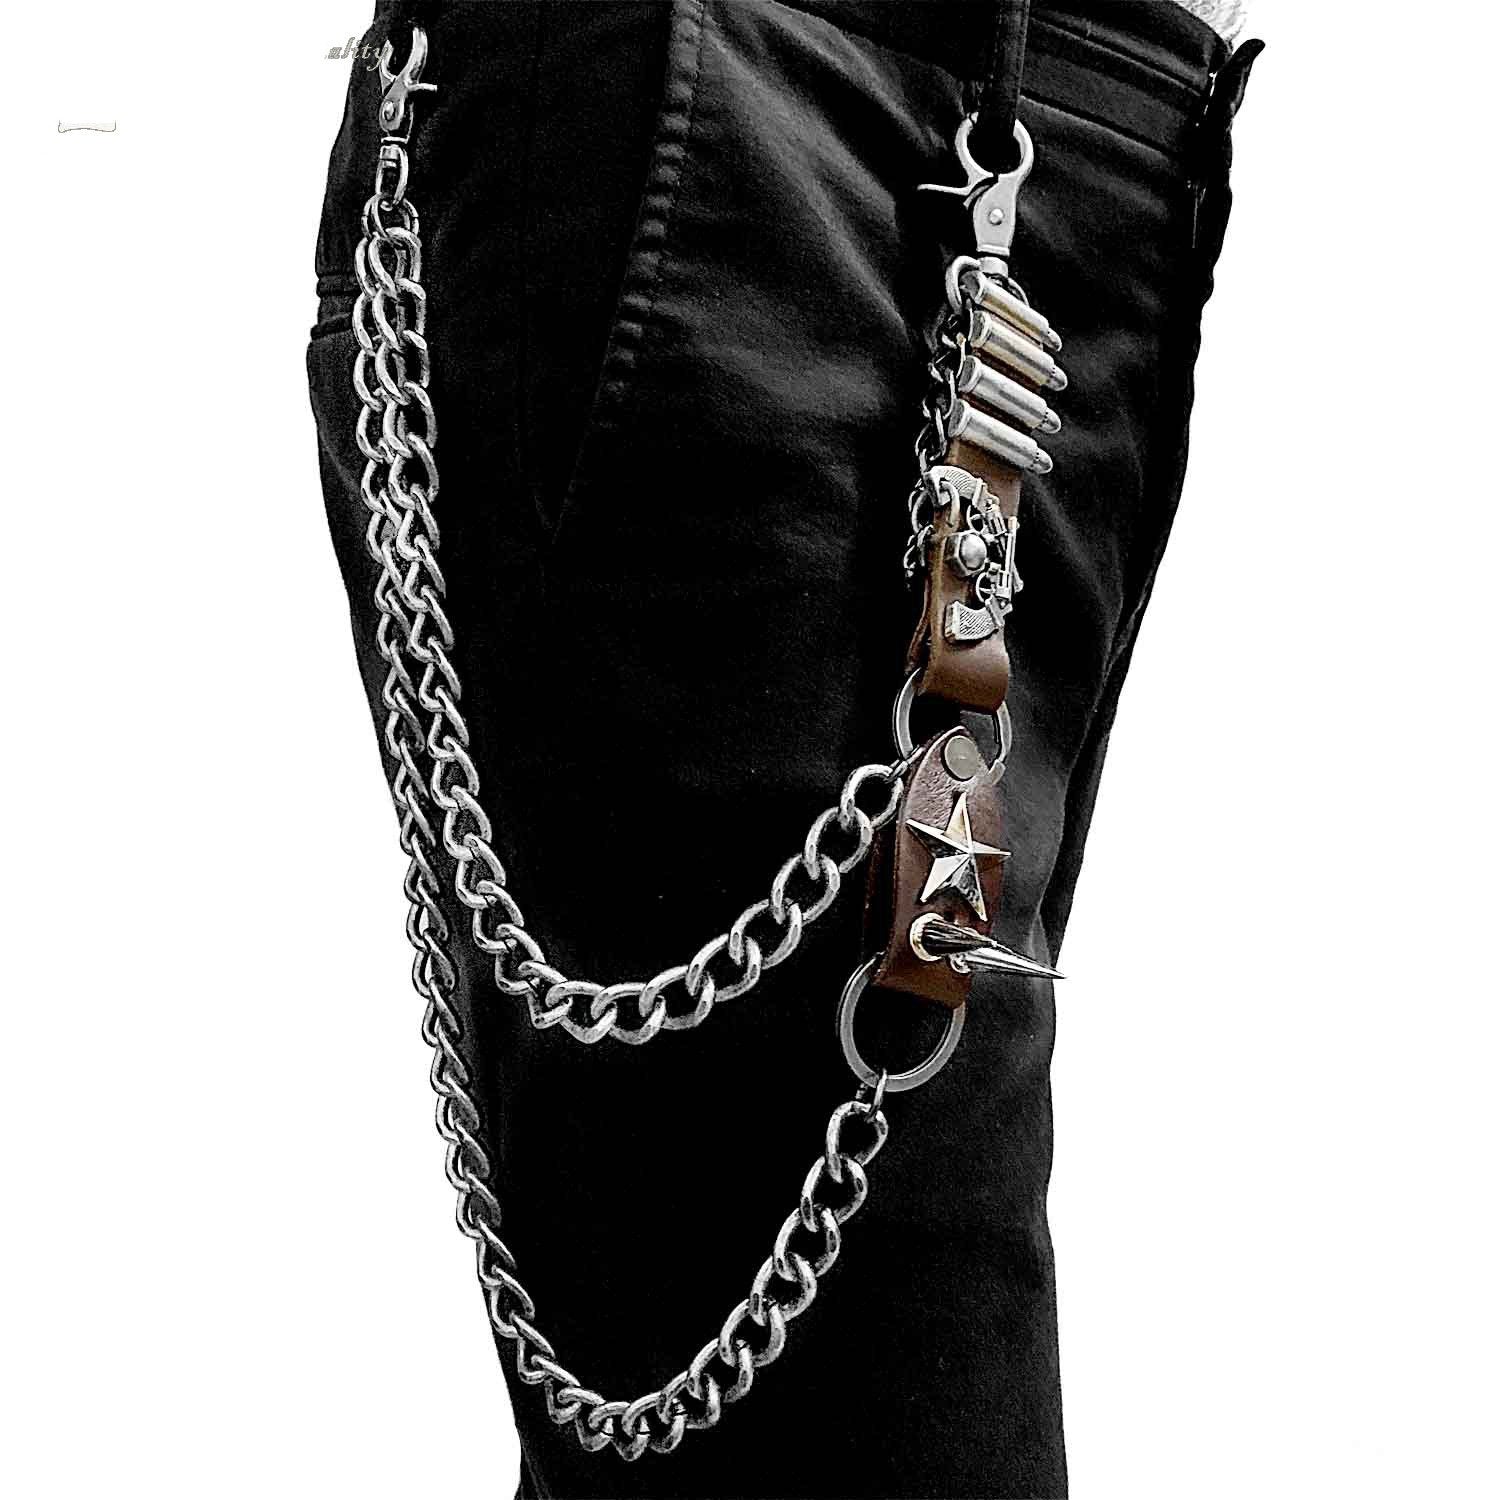 PINKPIN Heavy Biker Key Chain Pants Chain Belt Chain Wallet Chain